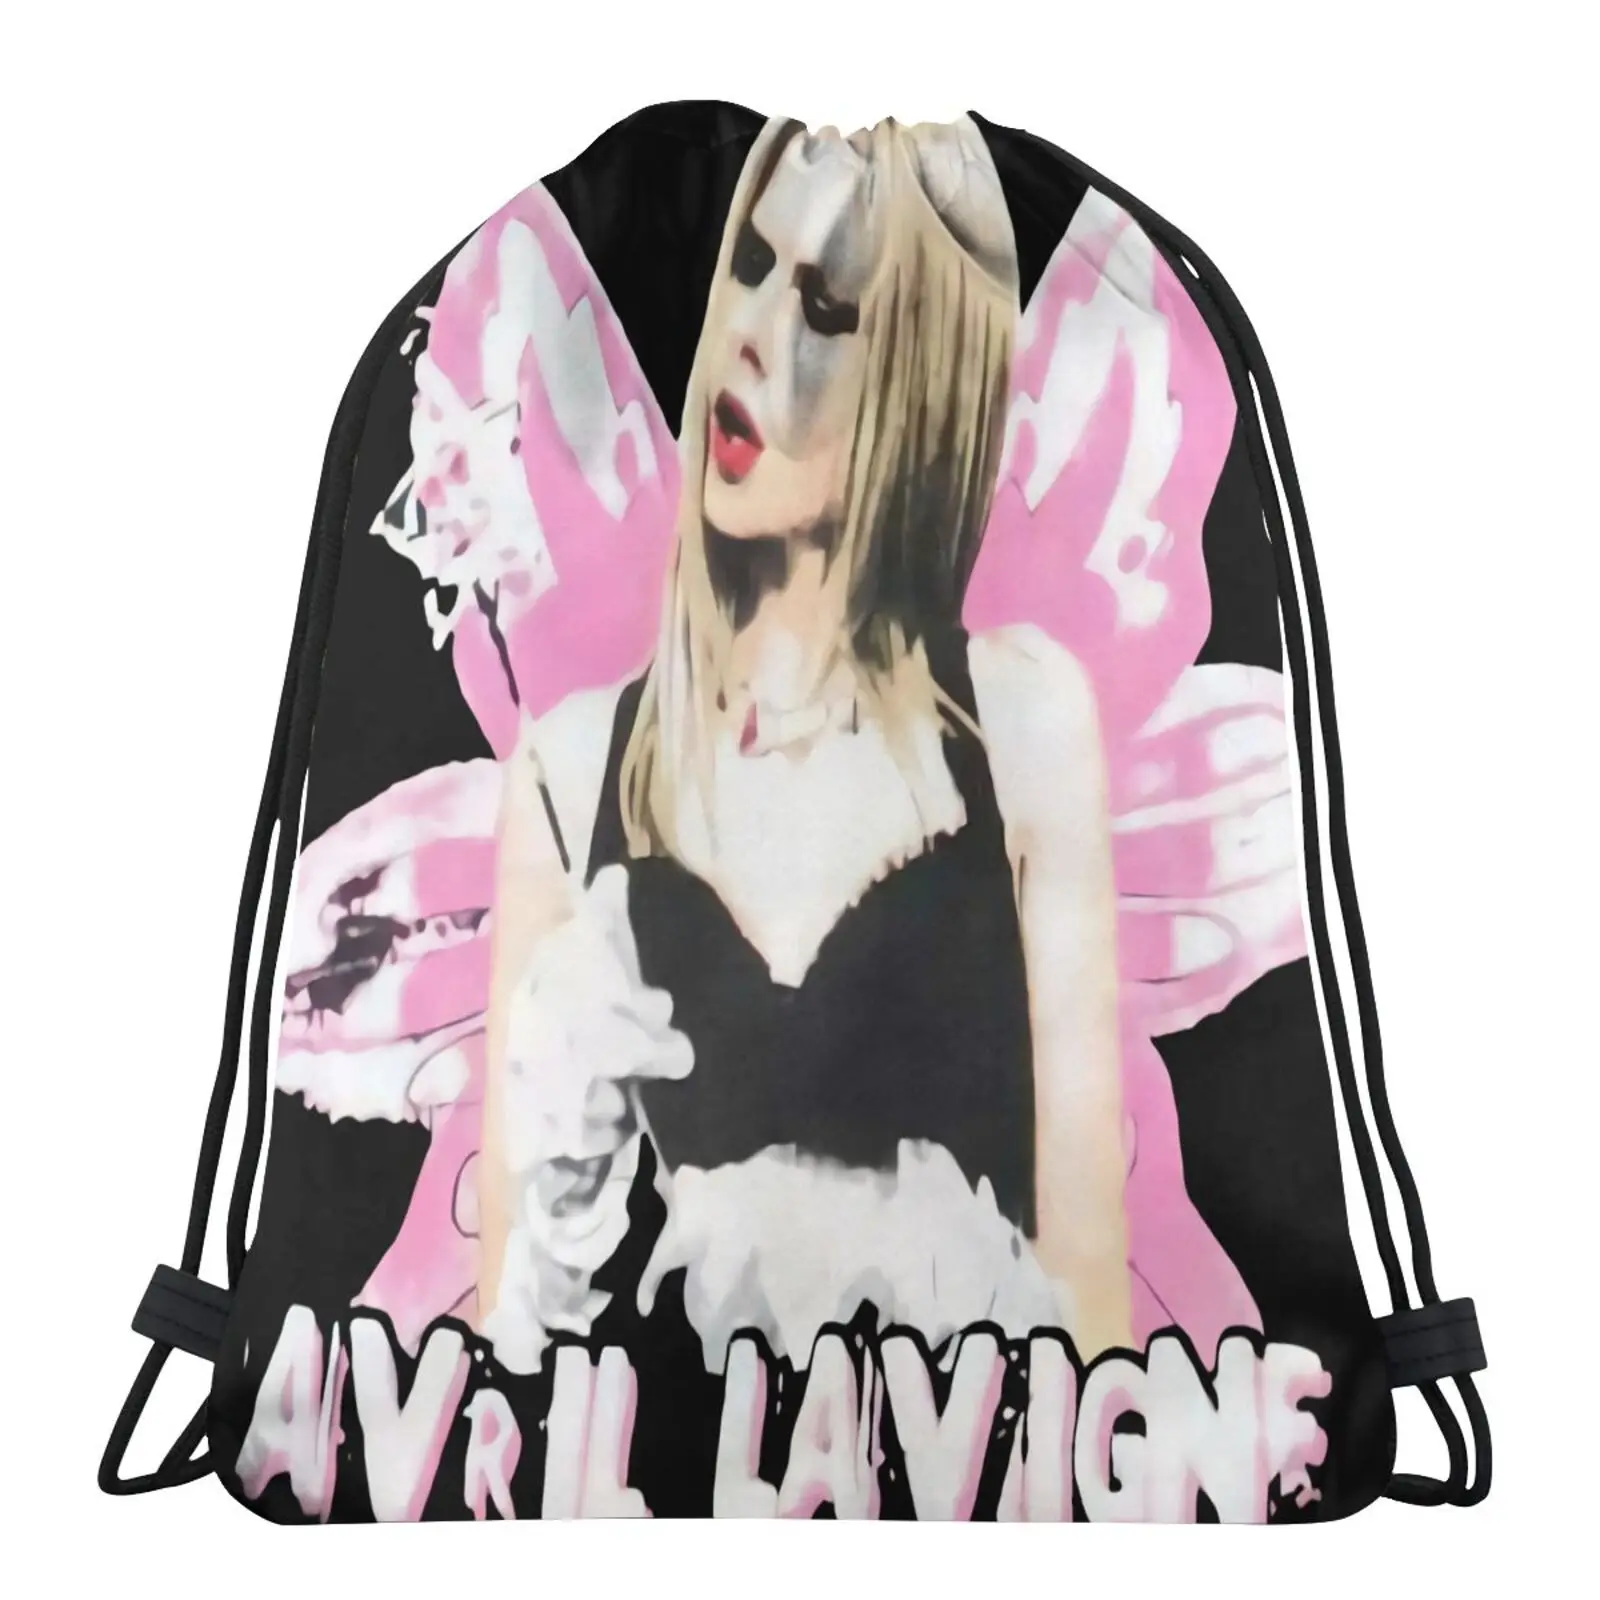 

Avril Lavigne Concert Album Reprint M633 Bag Cloth Bags Package Backpack Sack Backpack Cute Bag Cotton Drawstring Bag Cute Bag